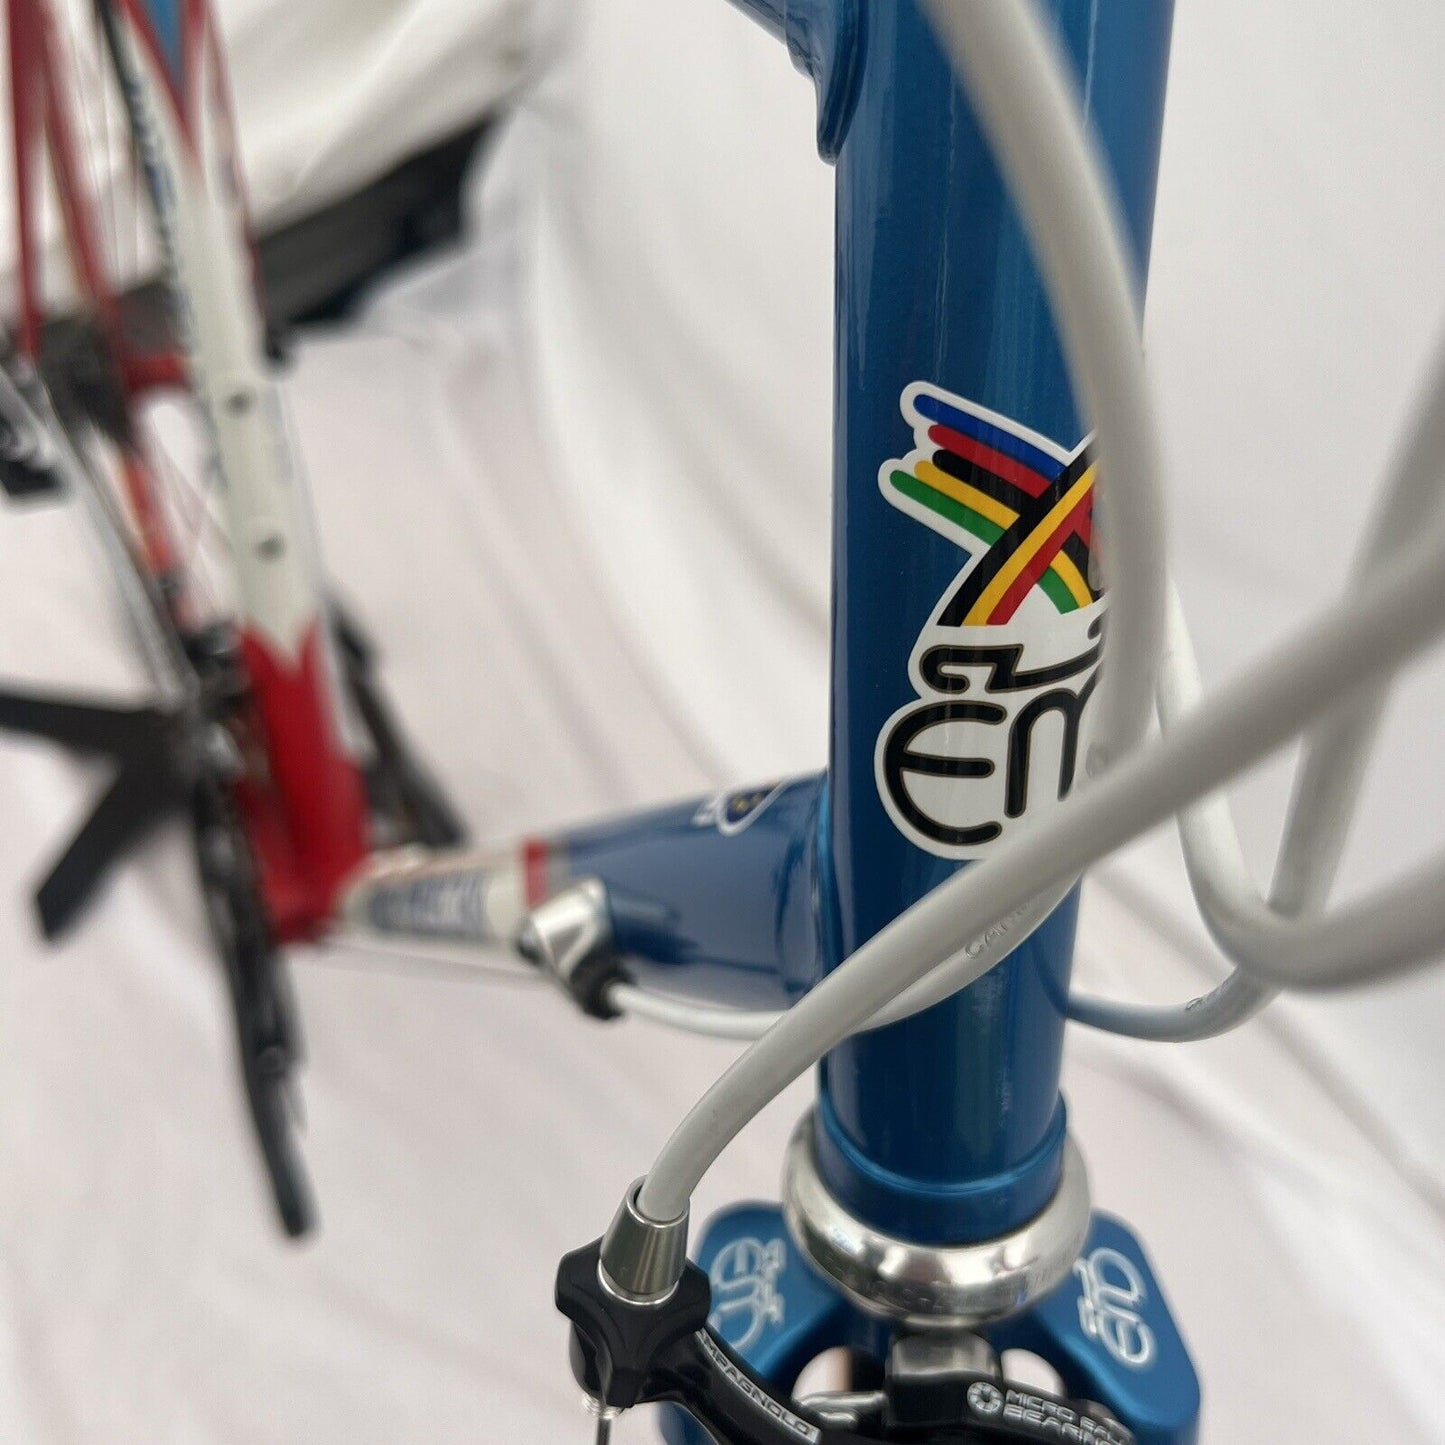 Eddy Merckx Mxl Team Motorola  Frame, Headset, Fork and Seatpost